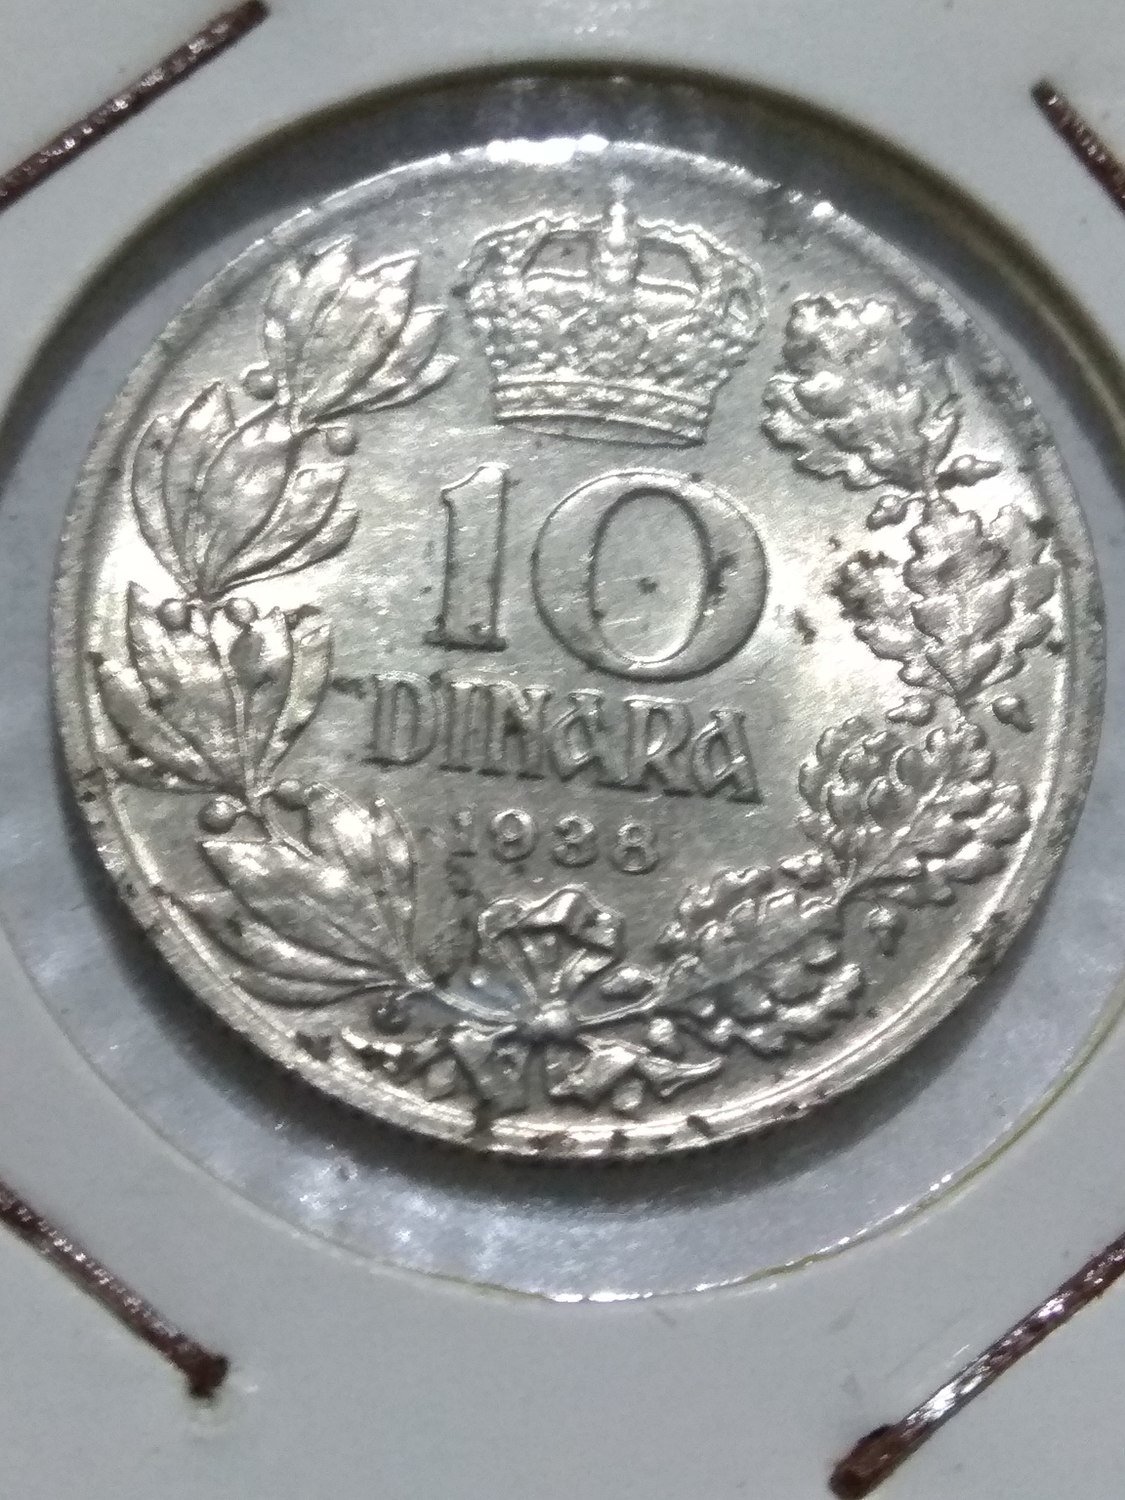 Югославия. Пётр II. 1938. 10 динар. Cu-Ni., 5.0 g., KM#22. XF